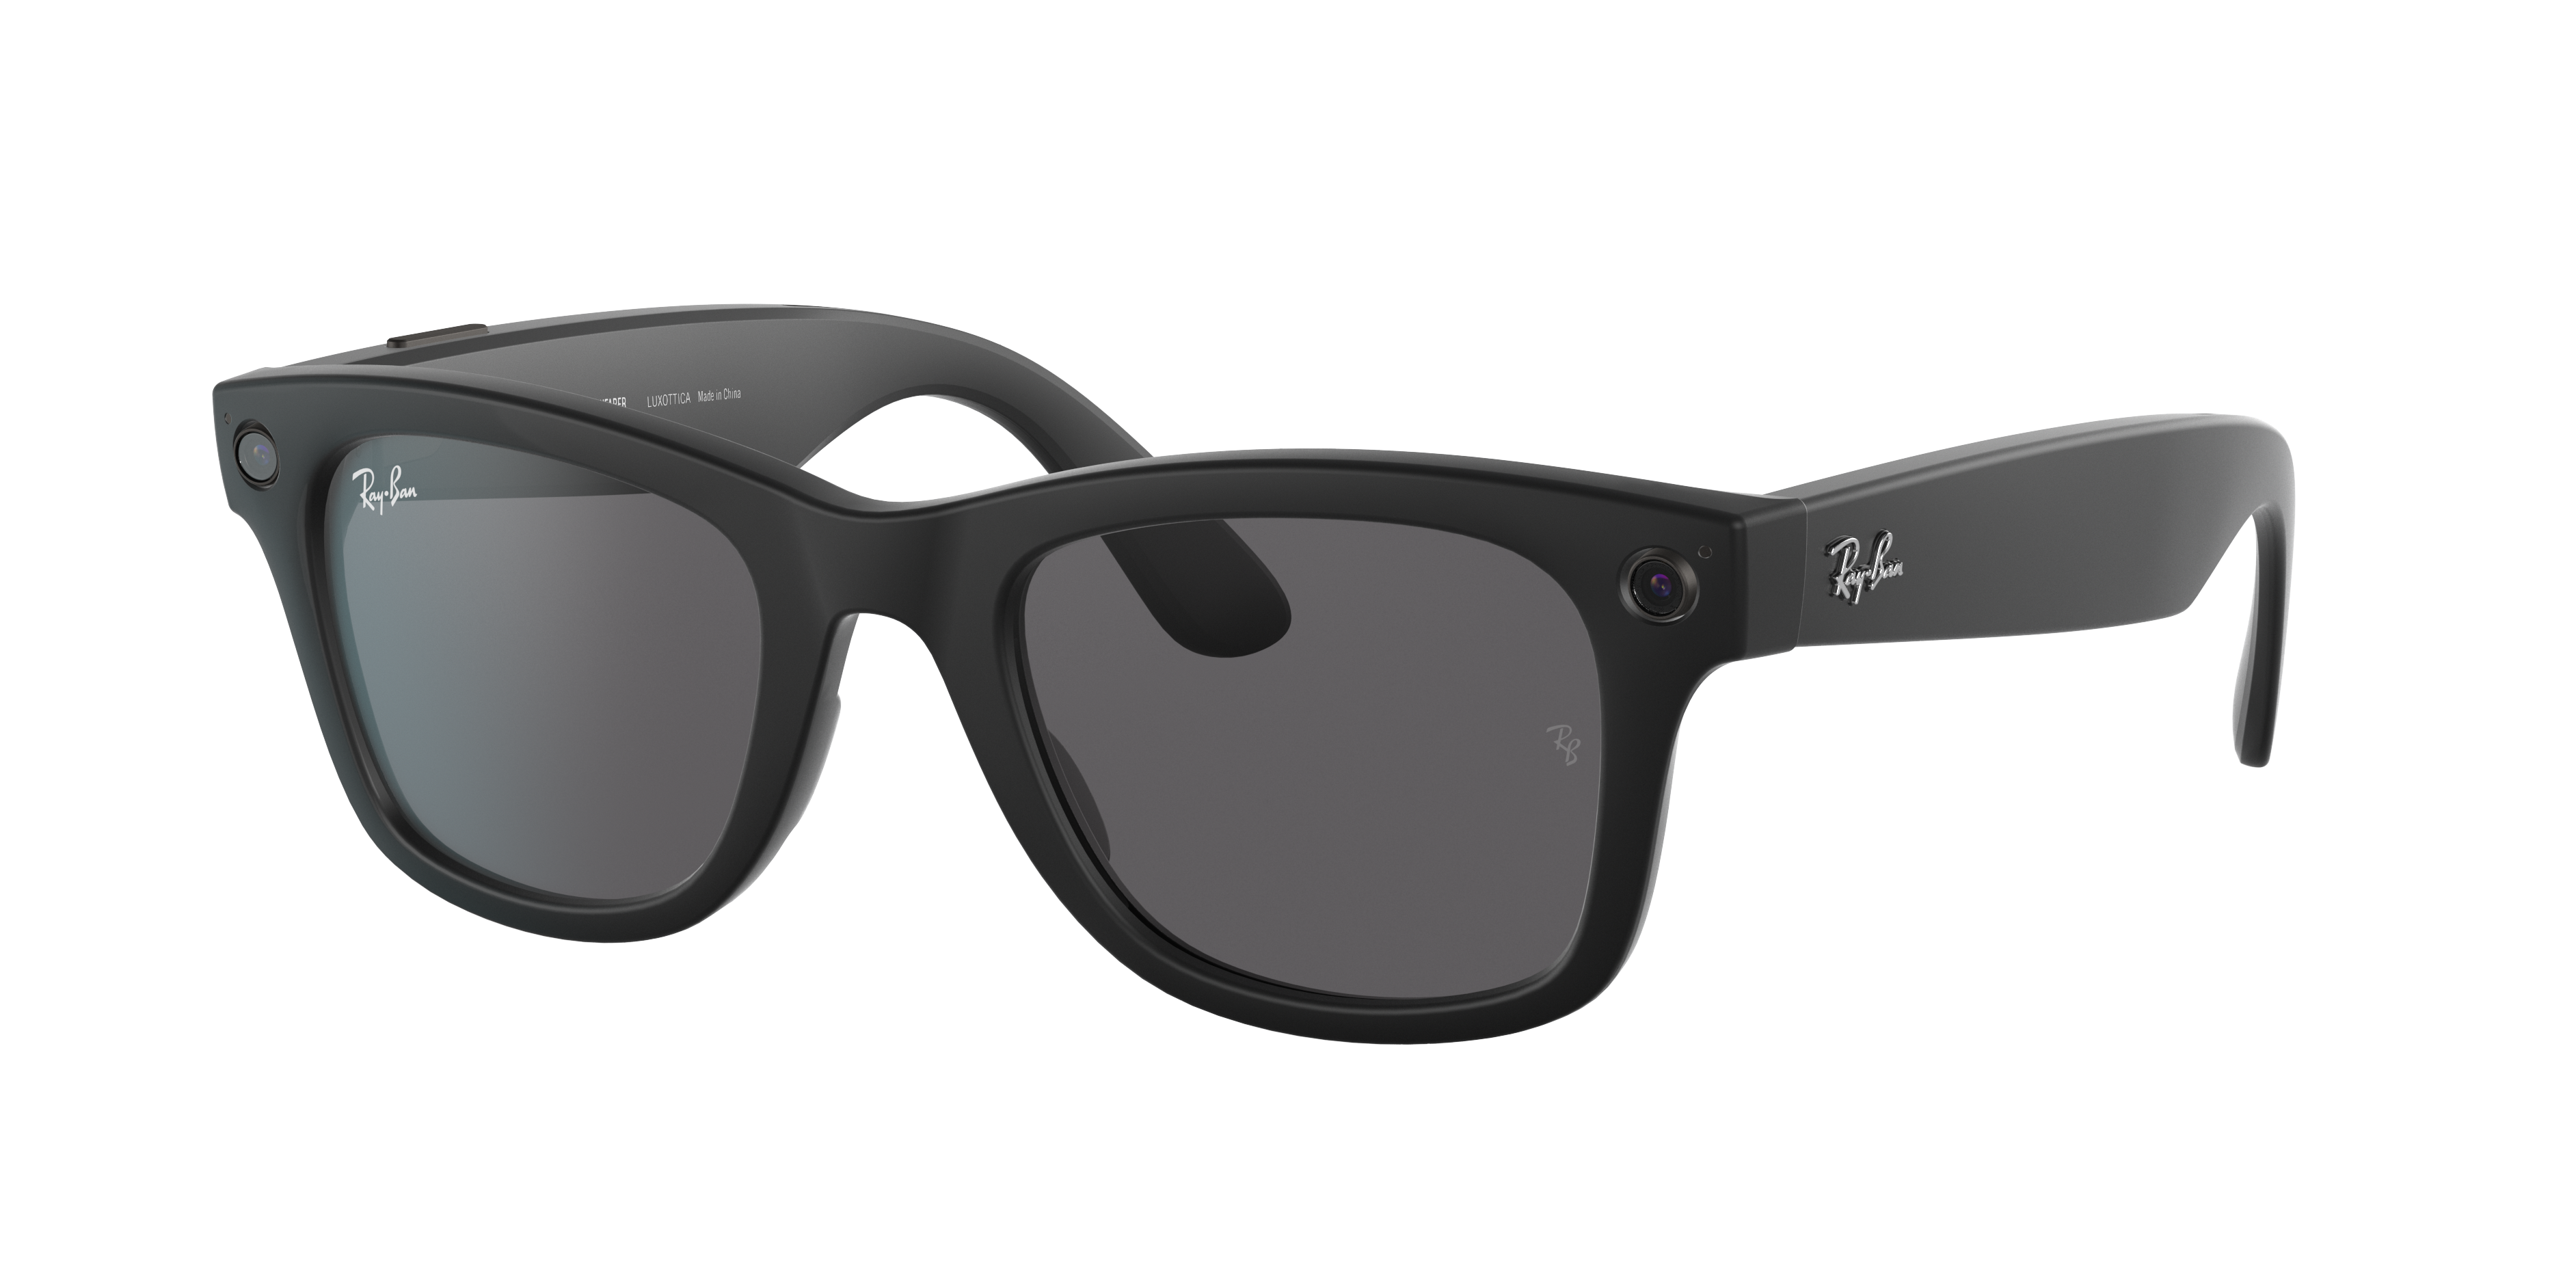 Ray-ban Stories | Wayfarer Sunglasses in Matte Black and Dark Grey